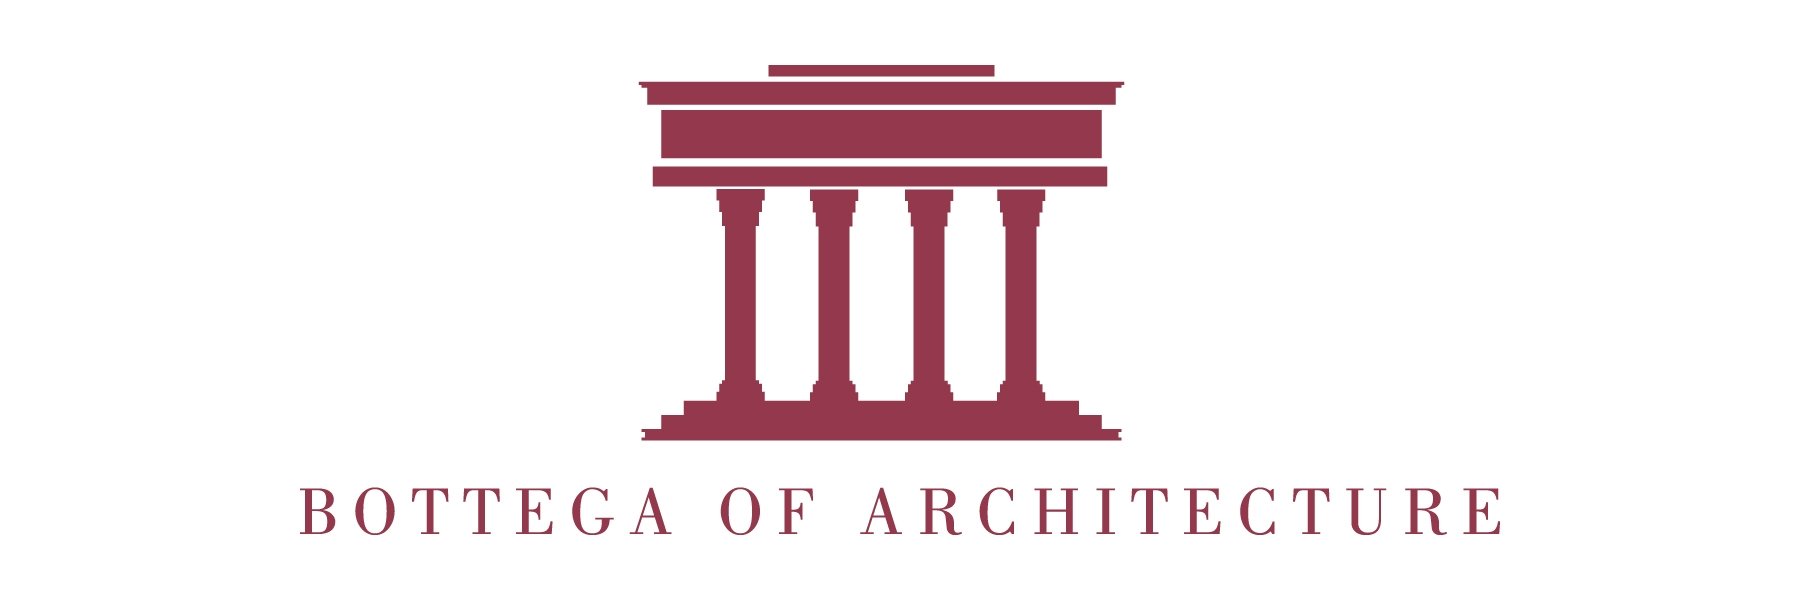 Bottega of Architecture Logo